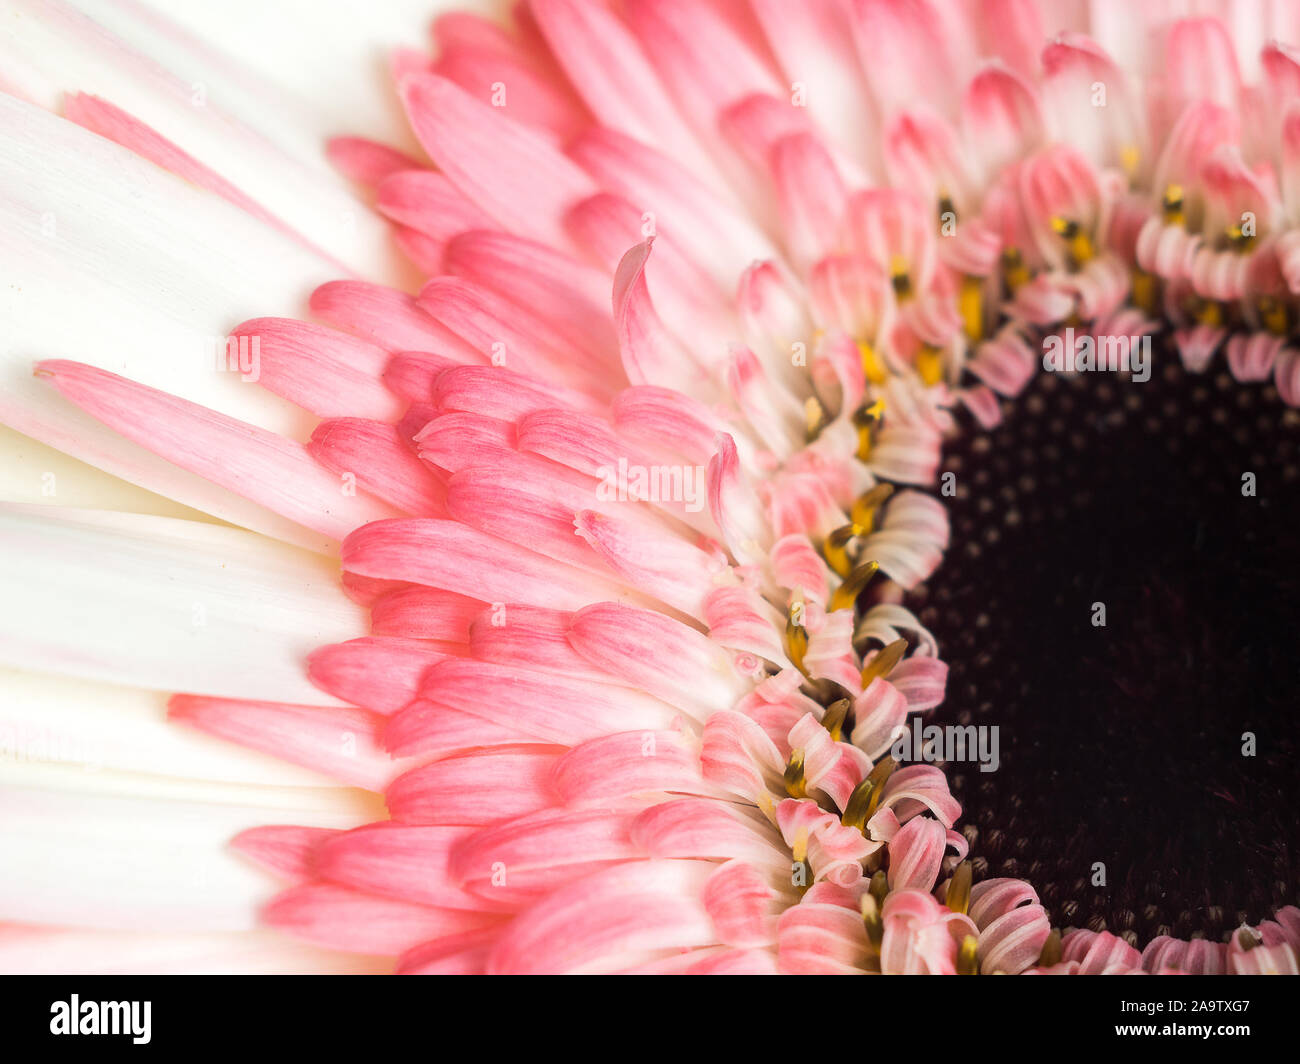 beautiful pink and white gerbera daisy flower close up Stock Photo